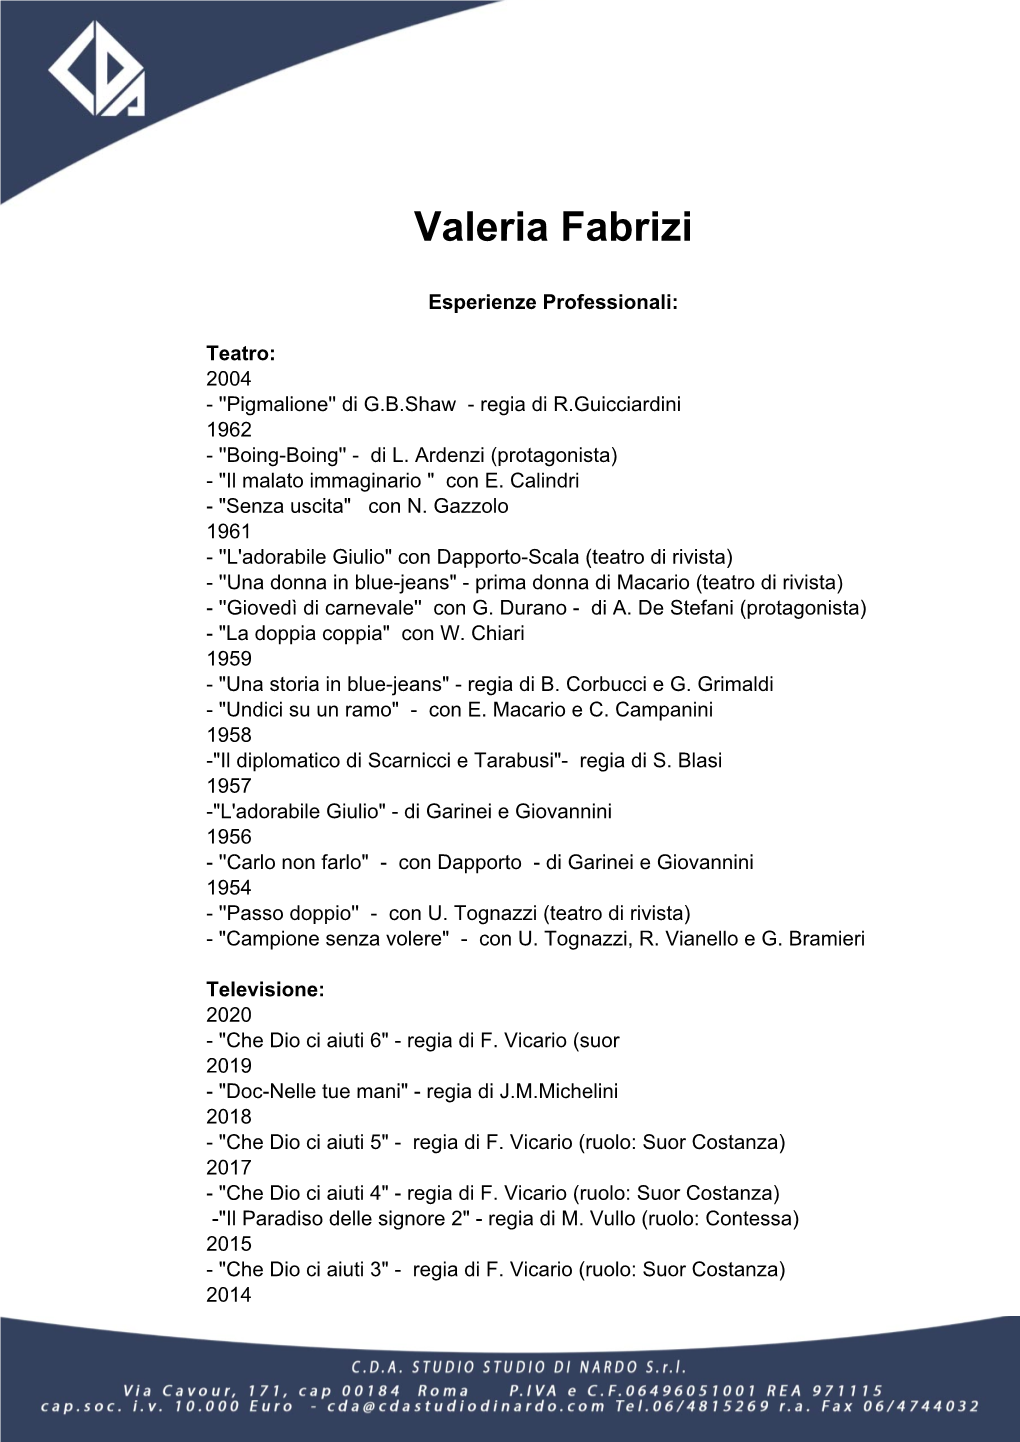 Valeria Fabrizi